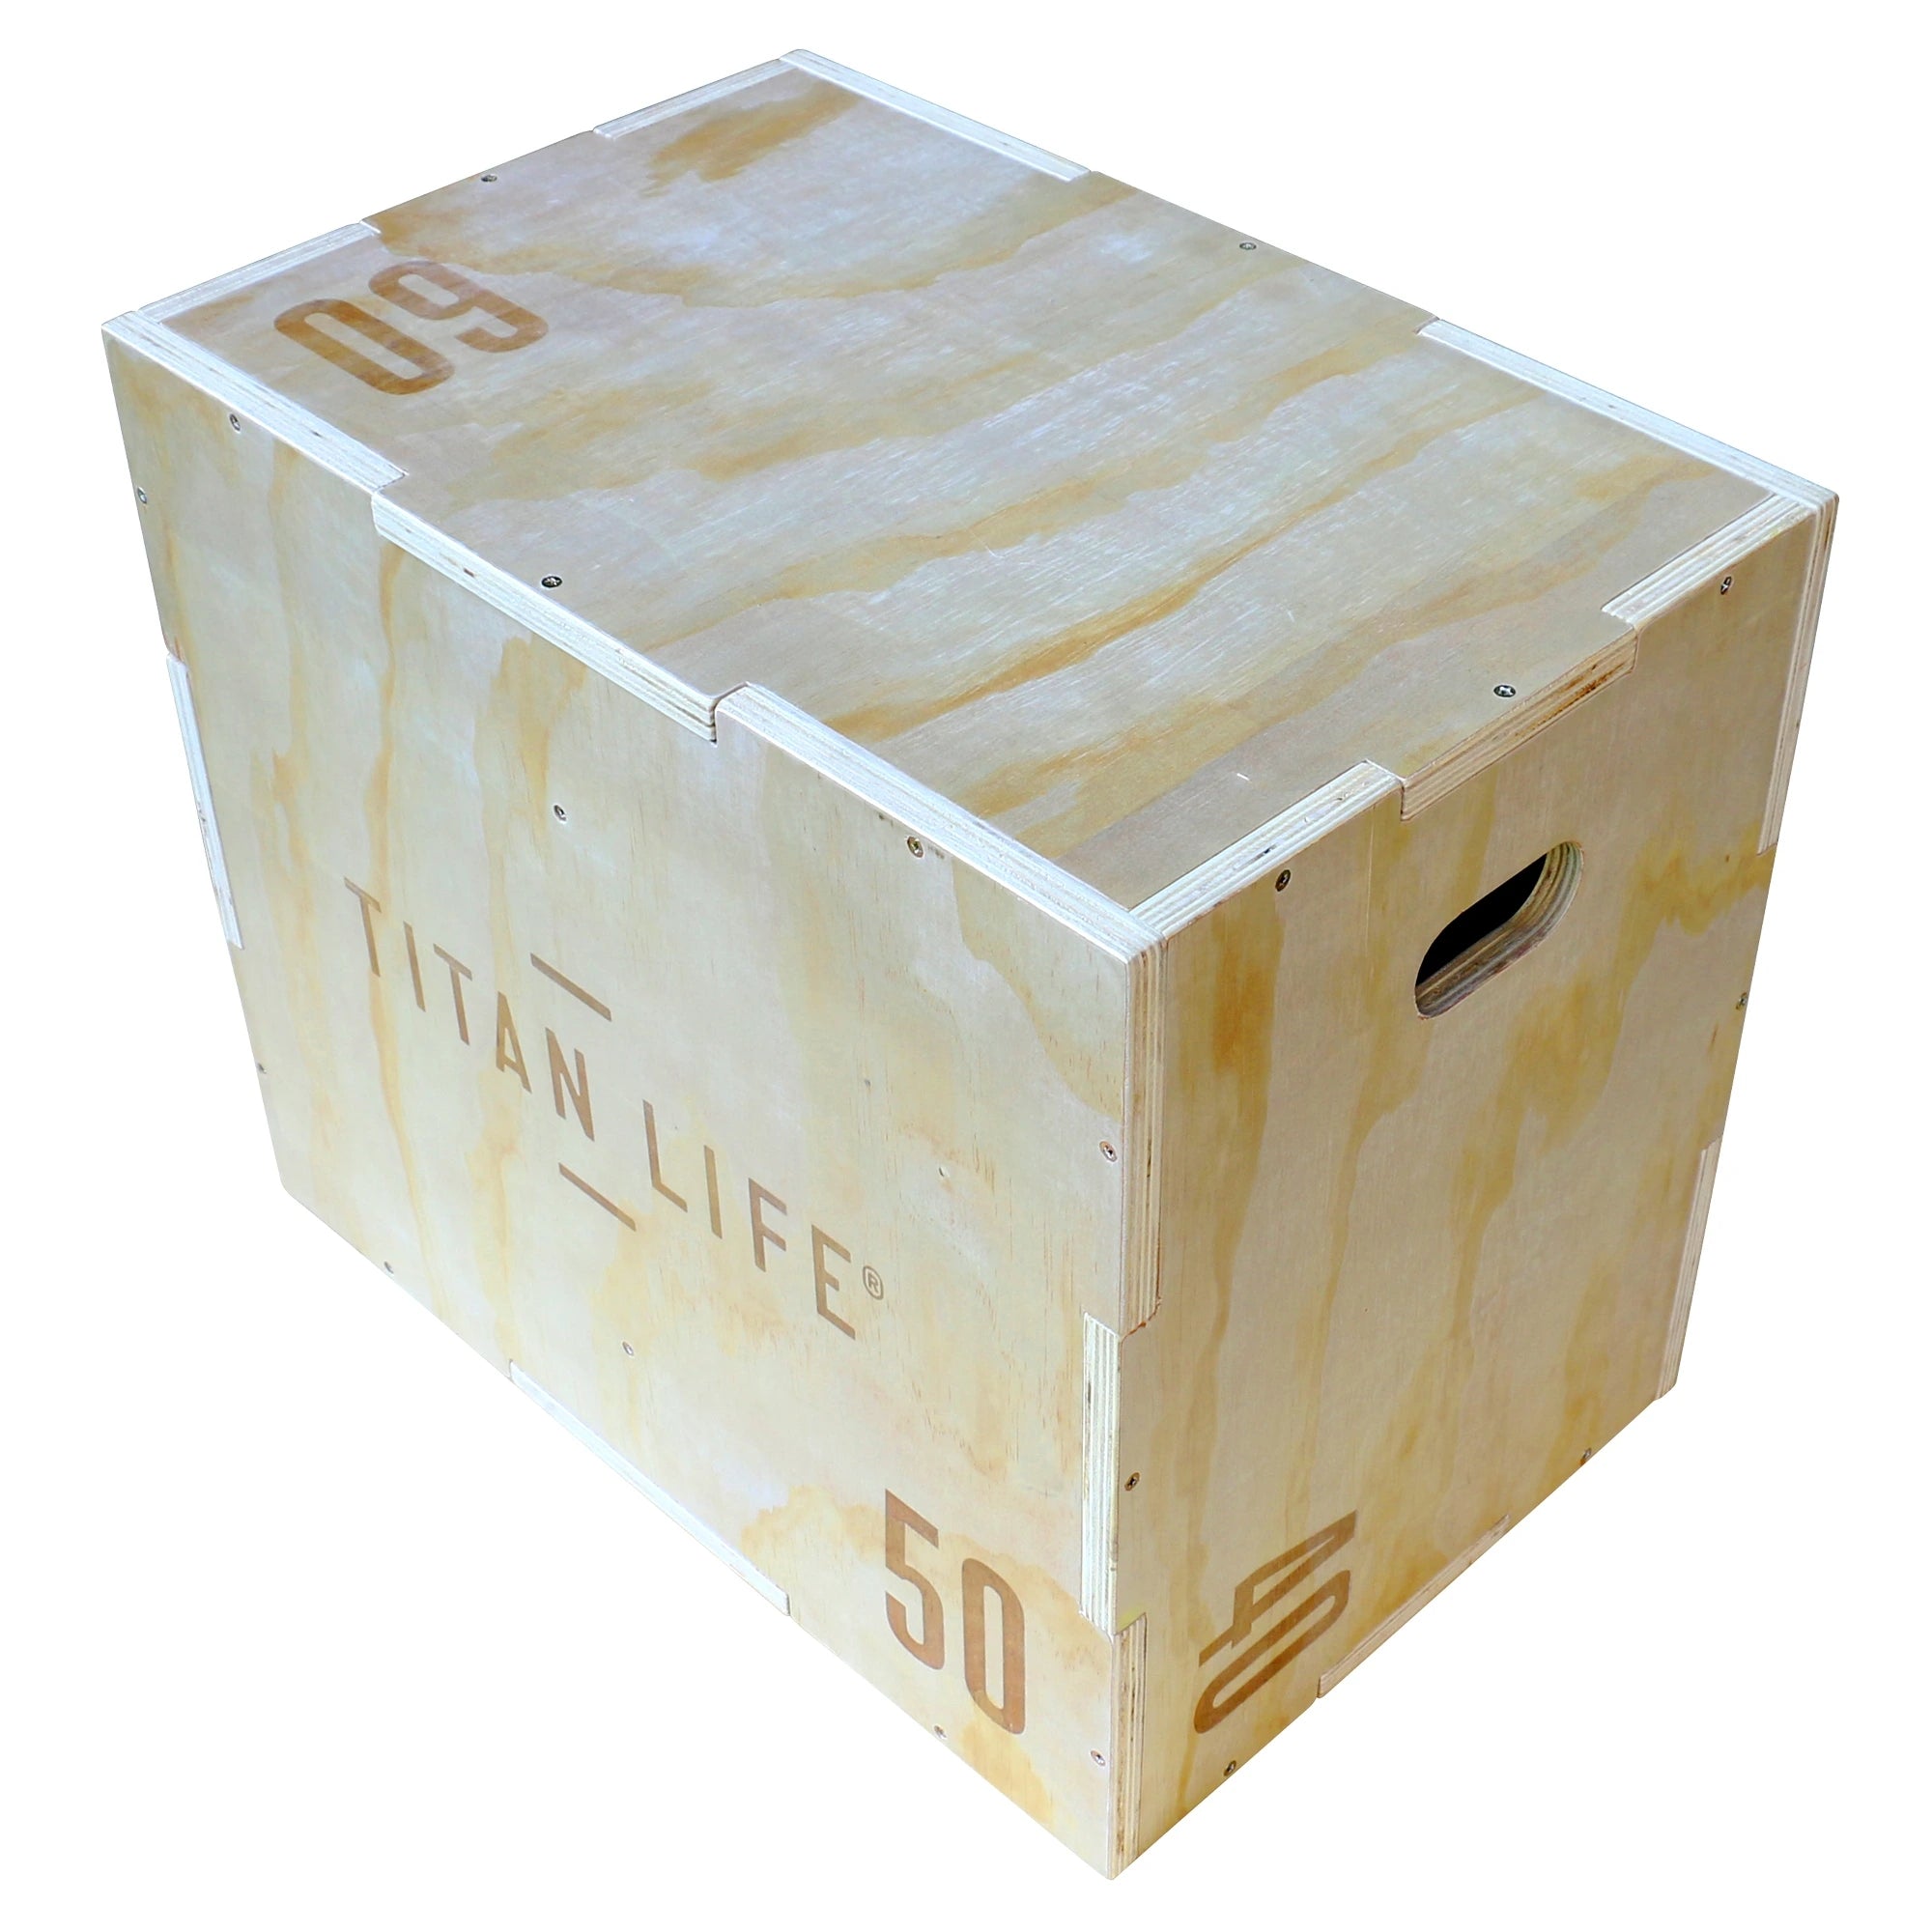 TITAN LIFE PRO Wooden Plyo Box